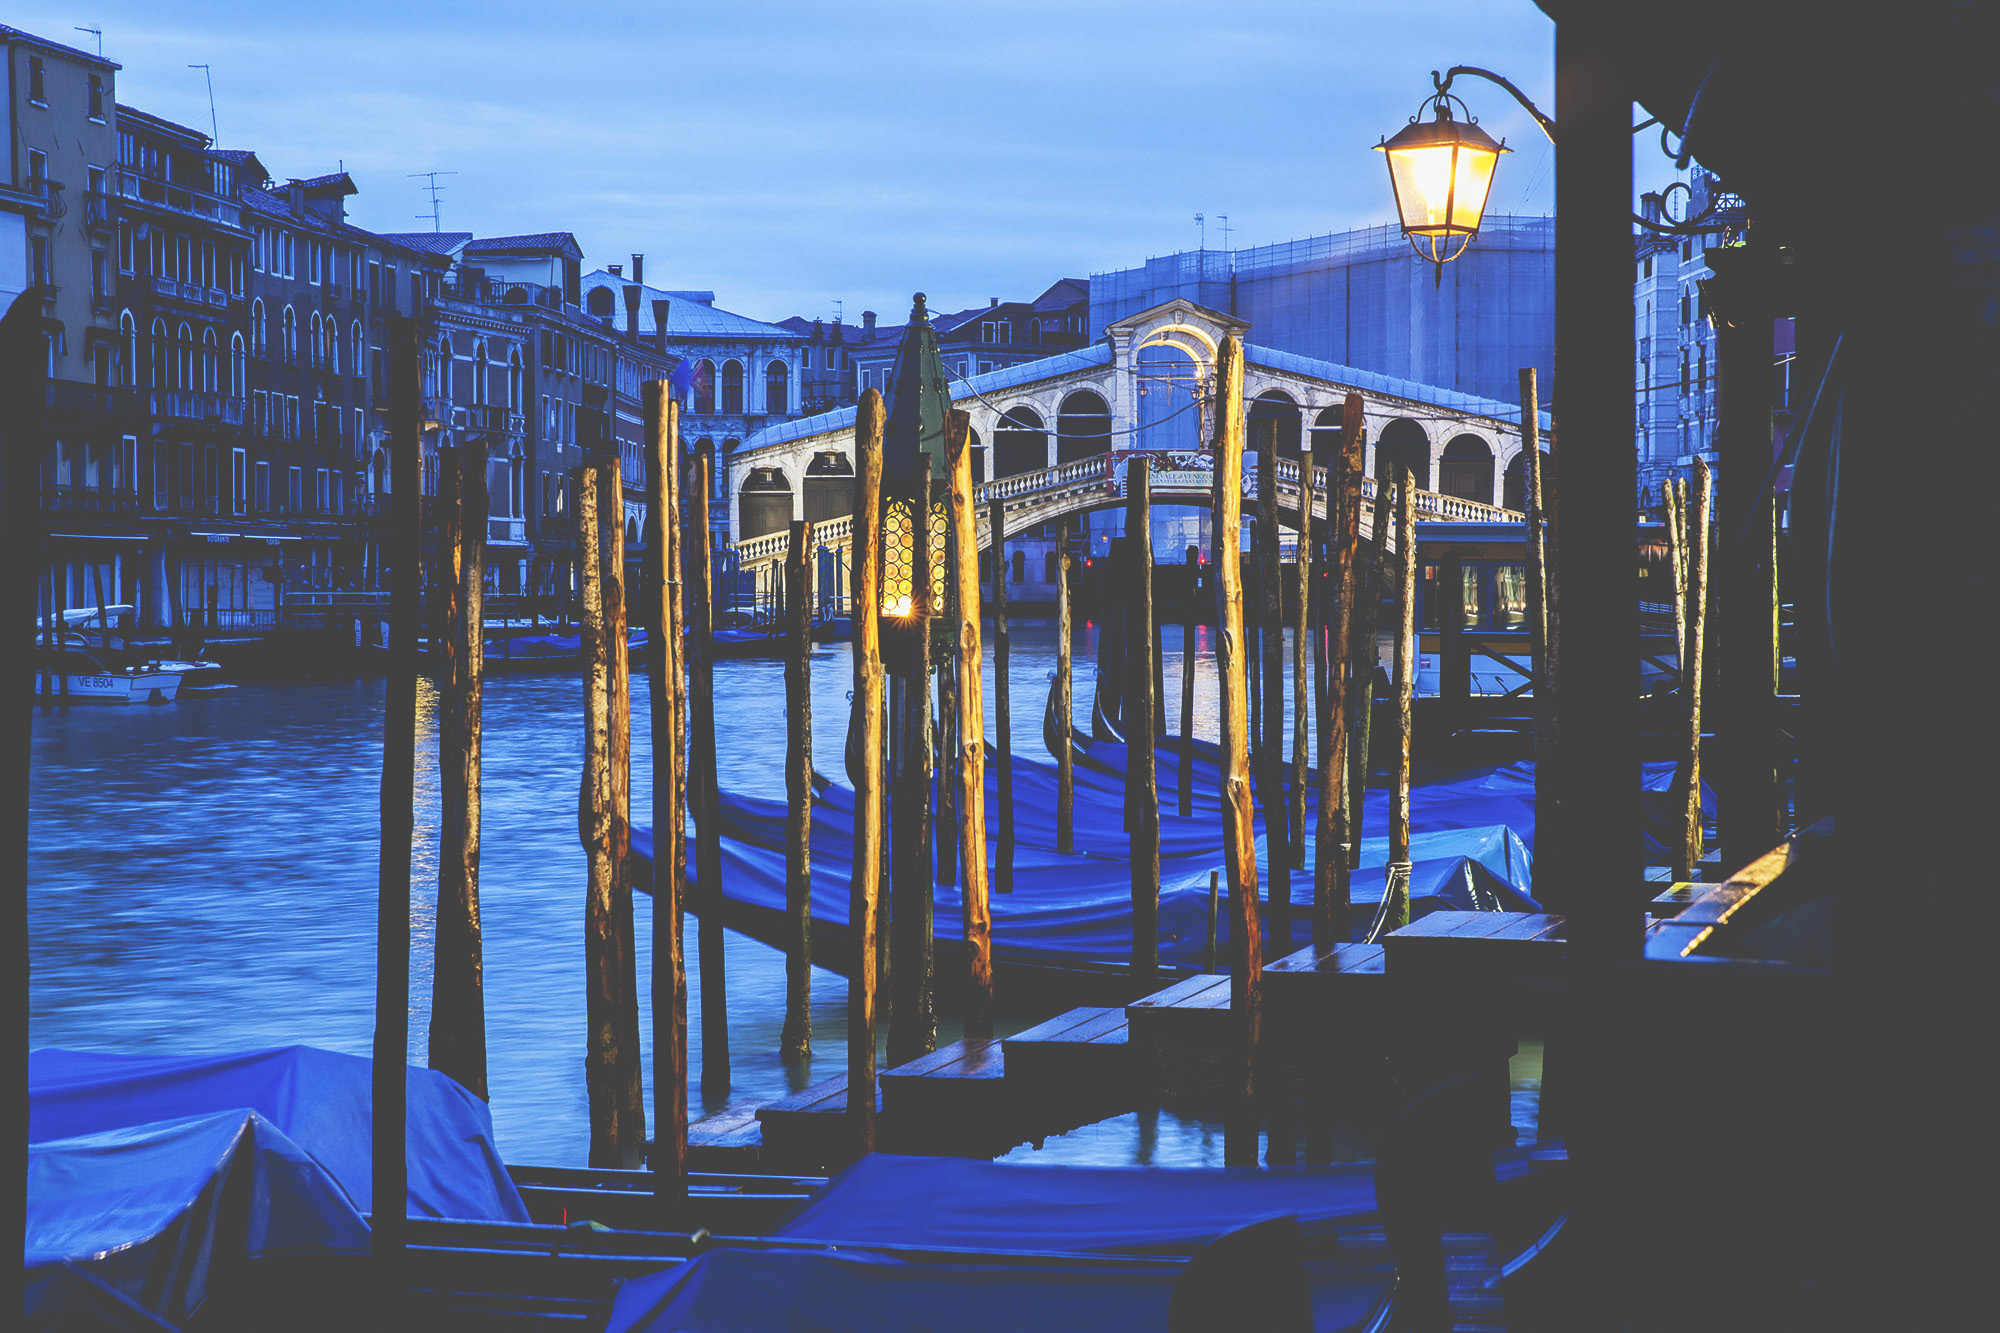 Rialto_Bridge-Venice-Veneto-Italy-Europe-20140301-0040.jpg